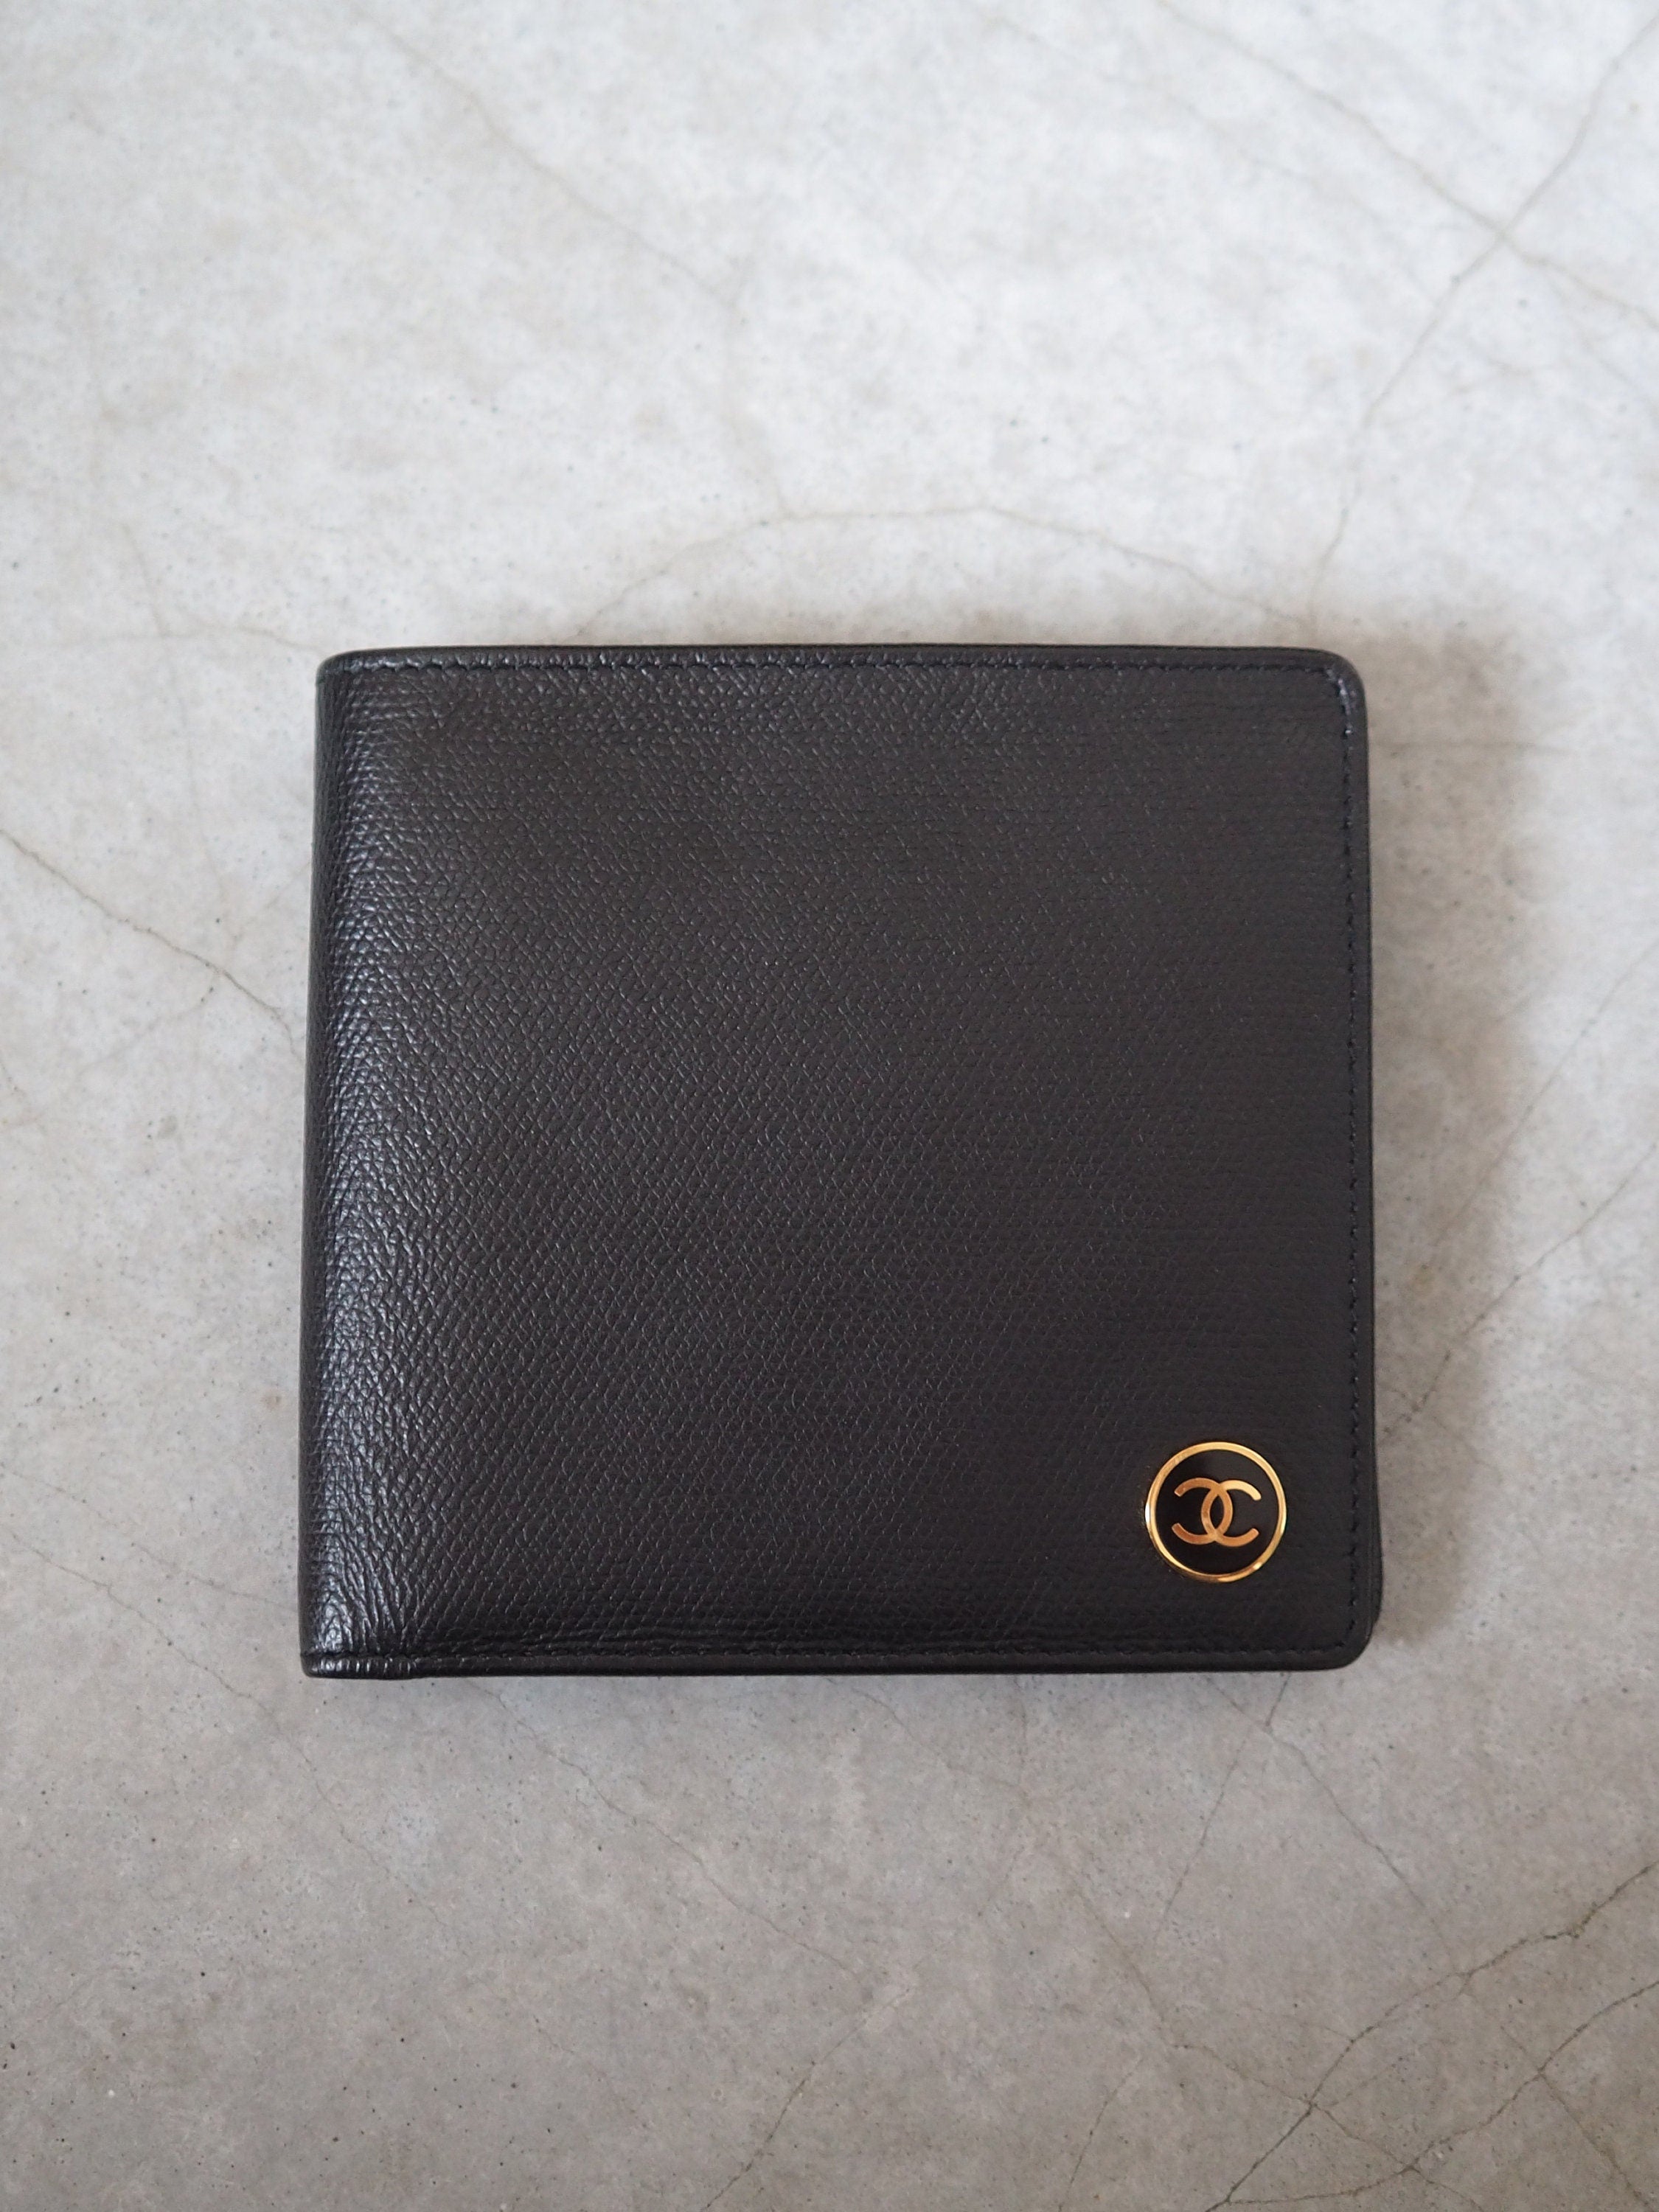 CHANEL COCO Button Wallet Compact Purse CC Leather Black Authentic Vintage Box